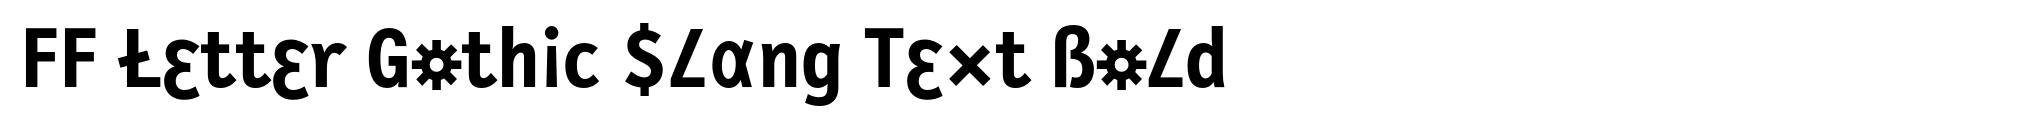 FF Letter Gothic Slang Text Bold image